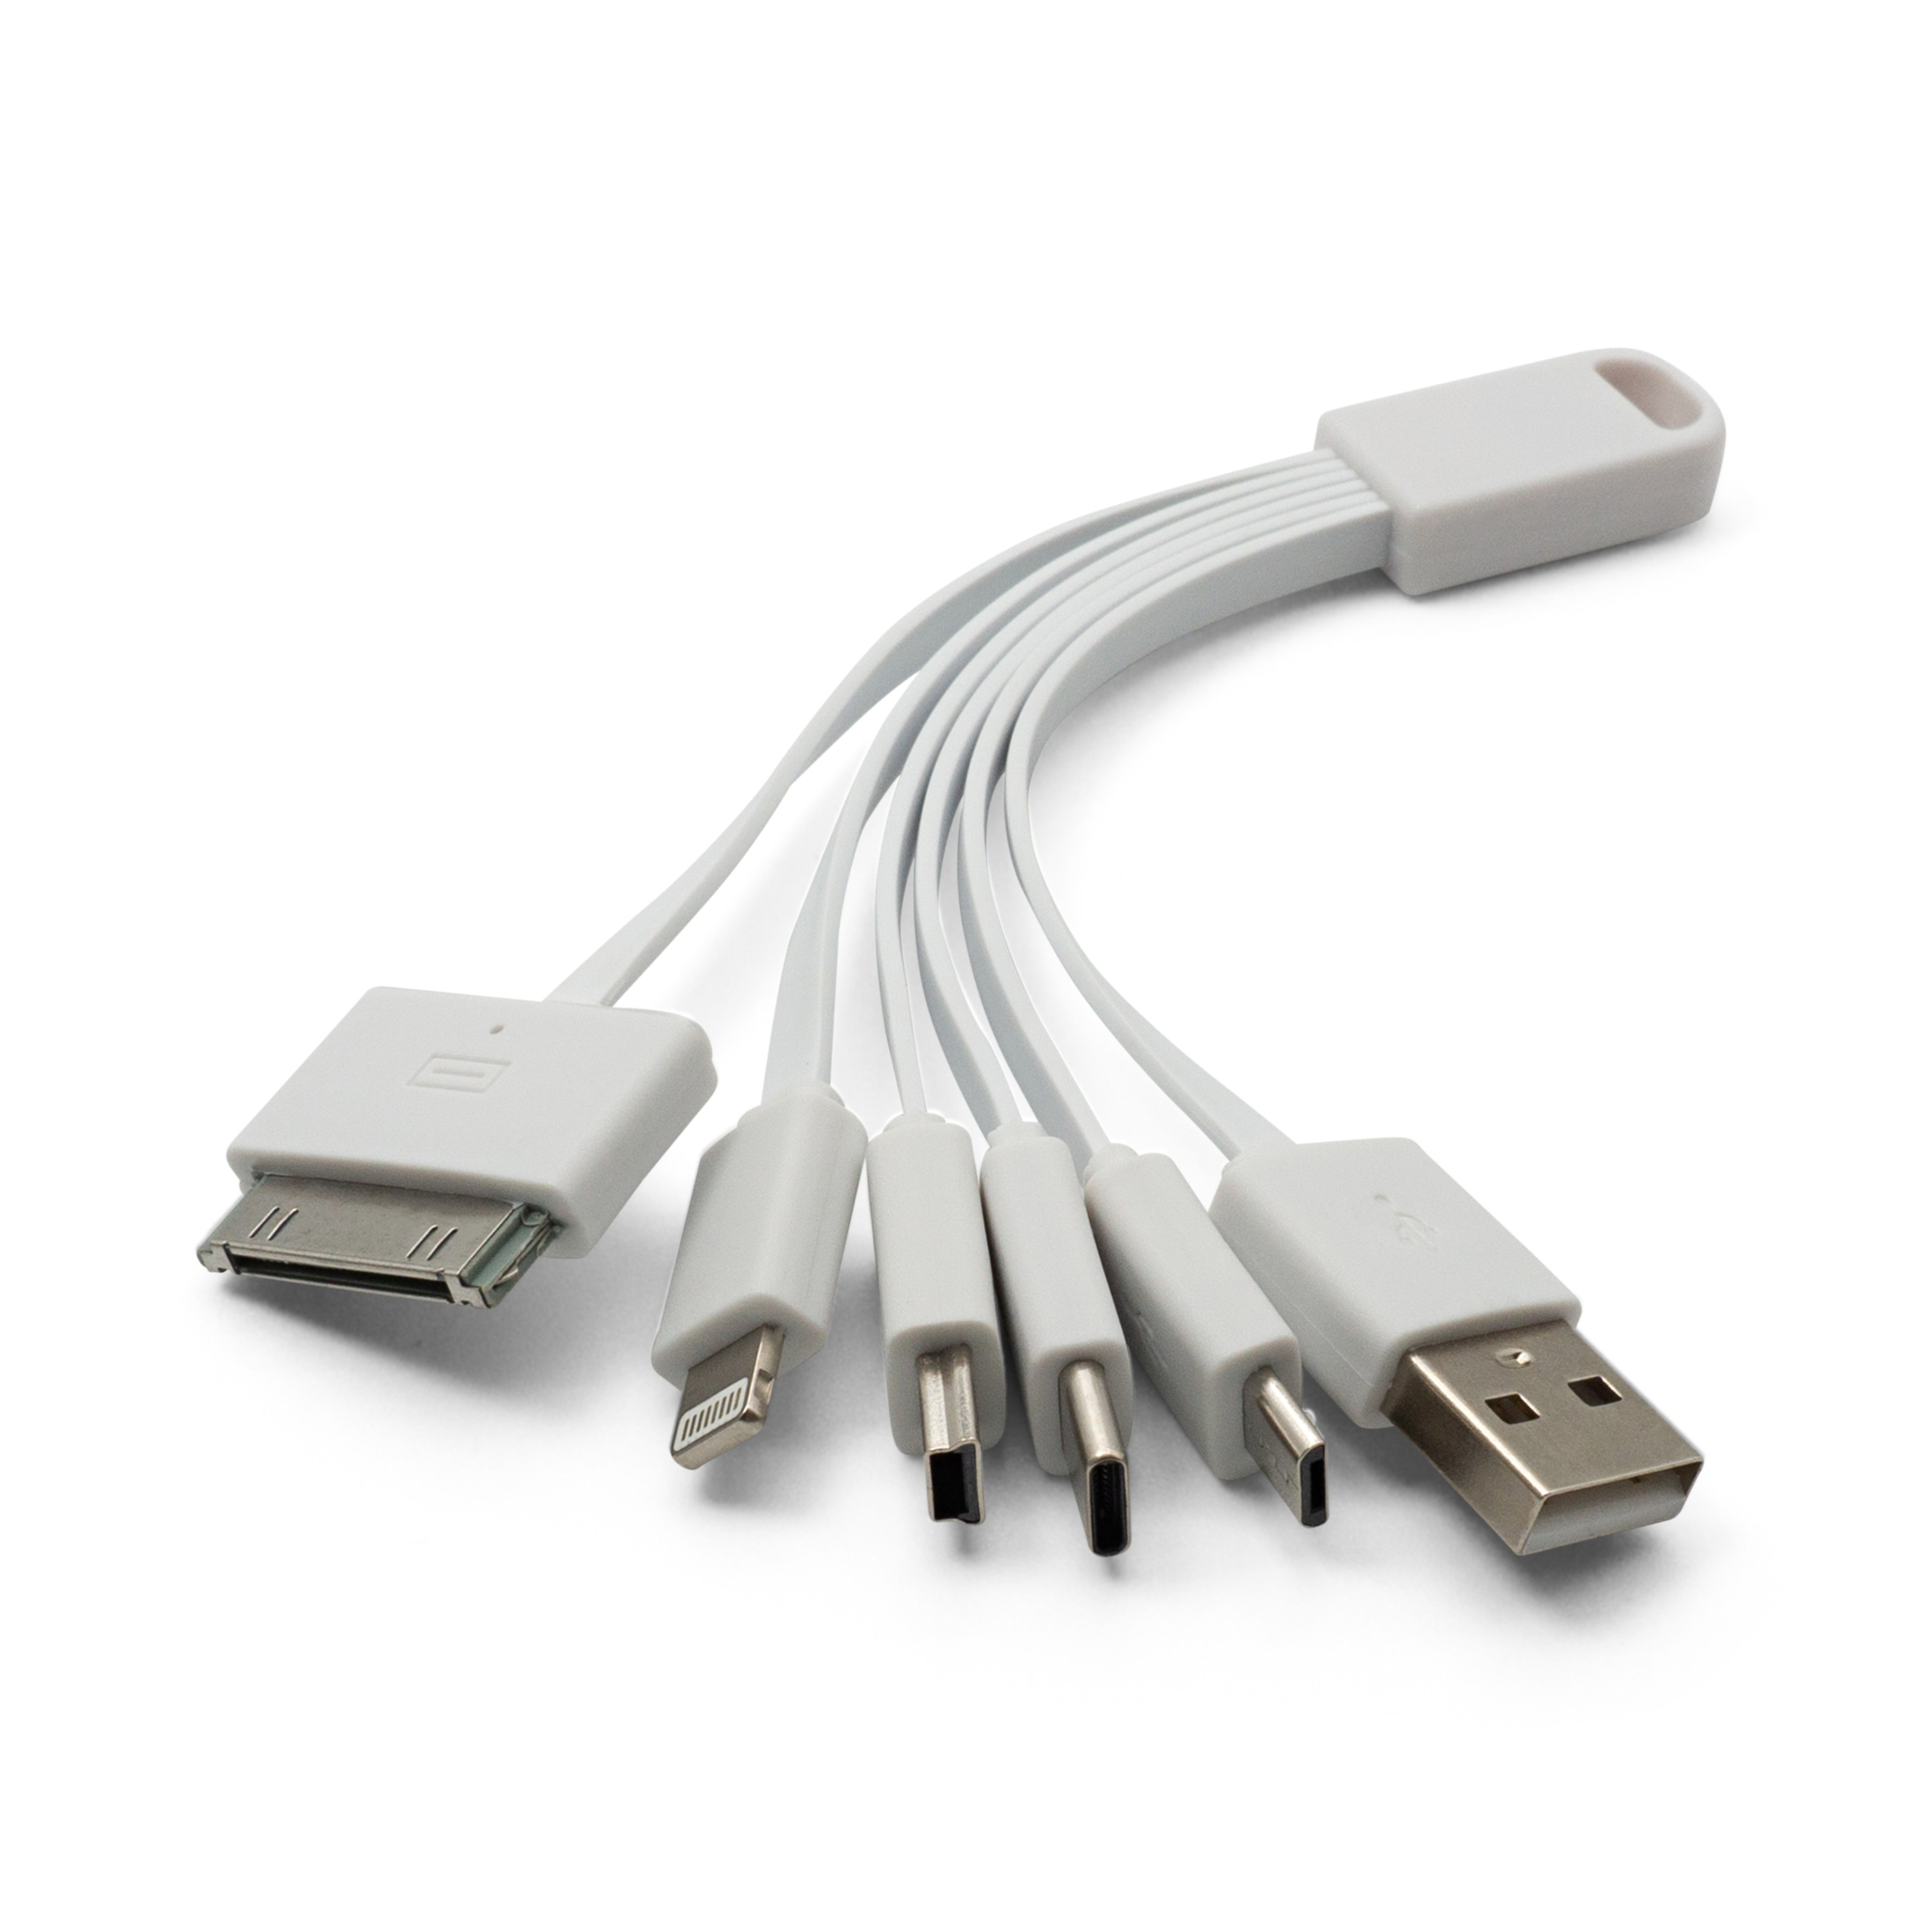 Apple Ladekabel MKQ42ZM/A, weiß, USB C auf Apple Lightning, BULK